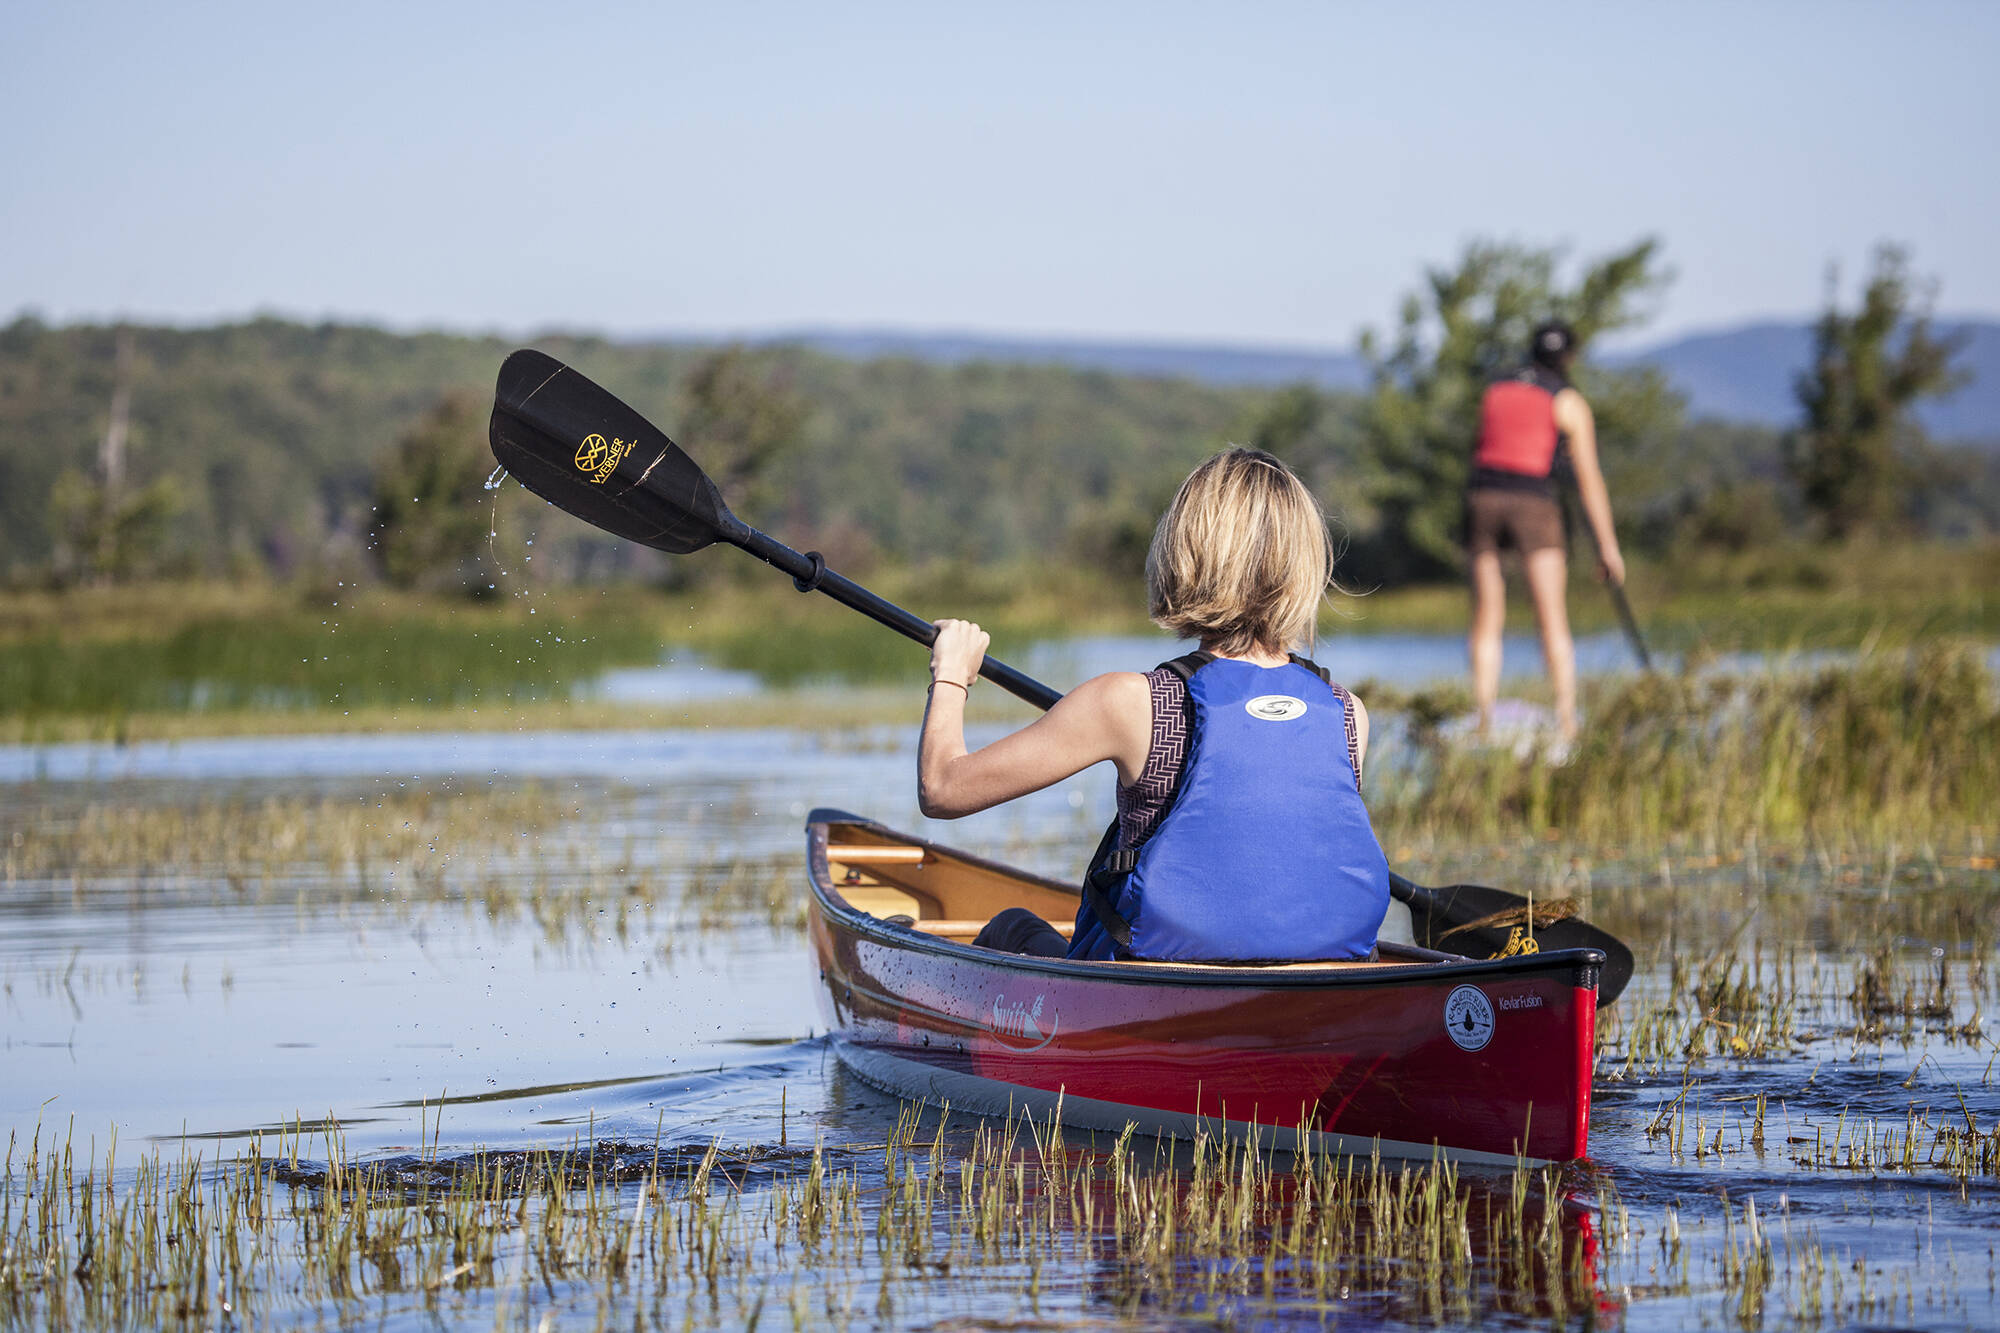 Canoe, Kayak & SUP Sales, Paddles, Tupper Lake & Lake Placid, NY